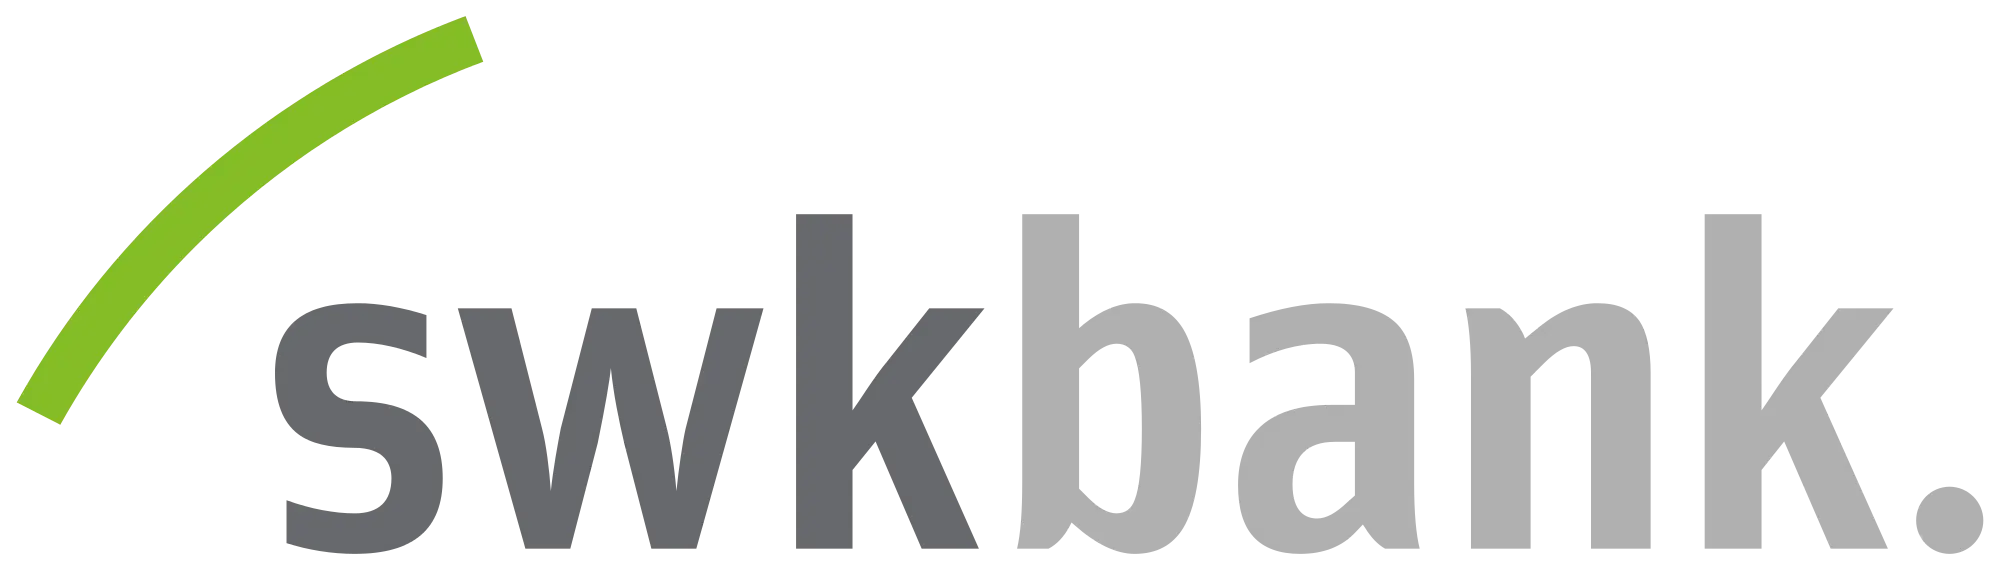 SWK_Bank_2009_logo